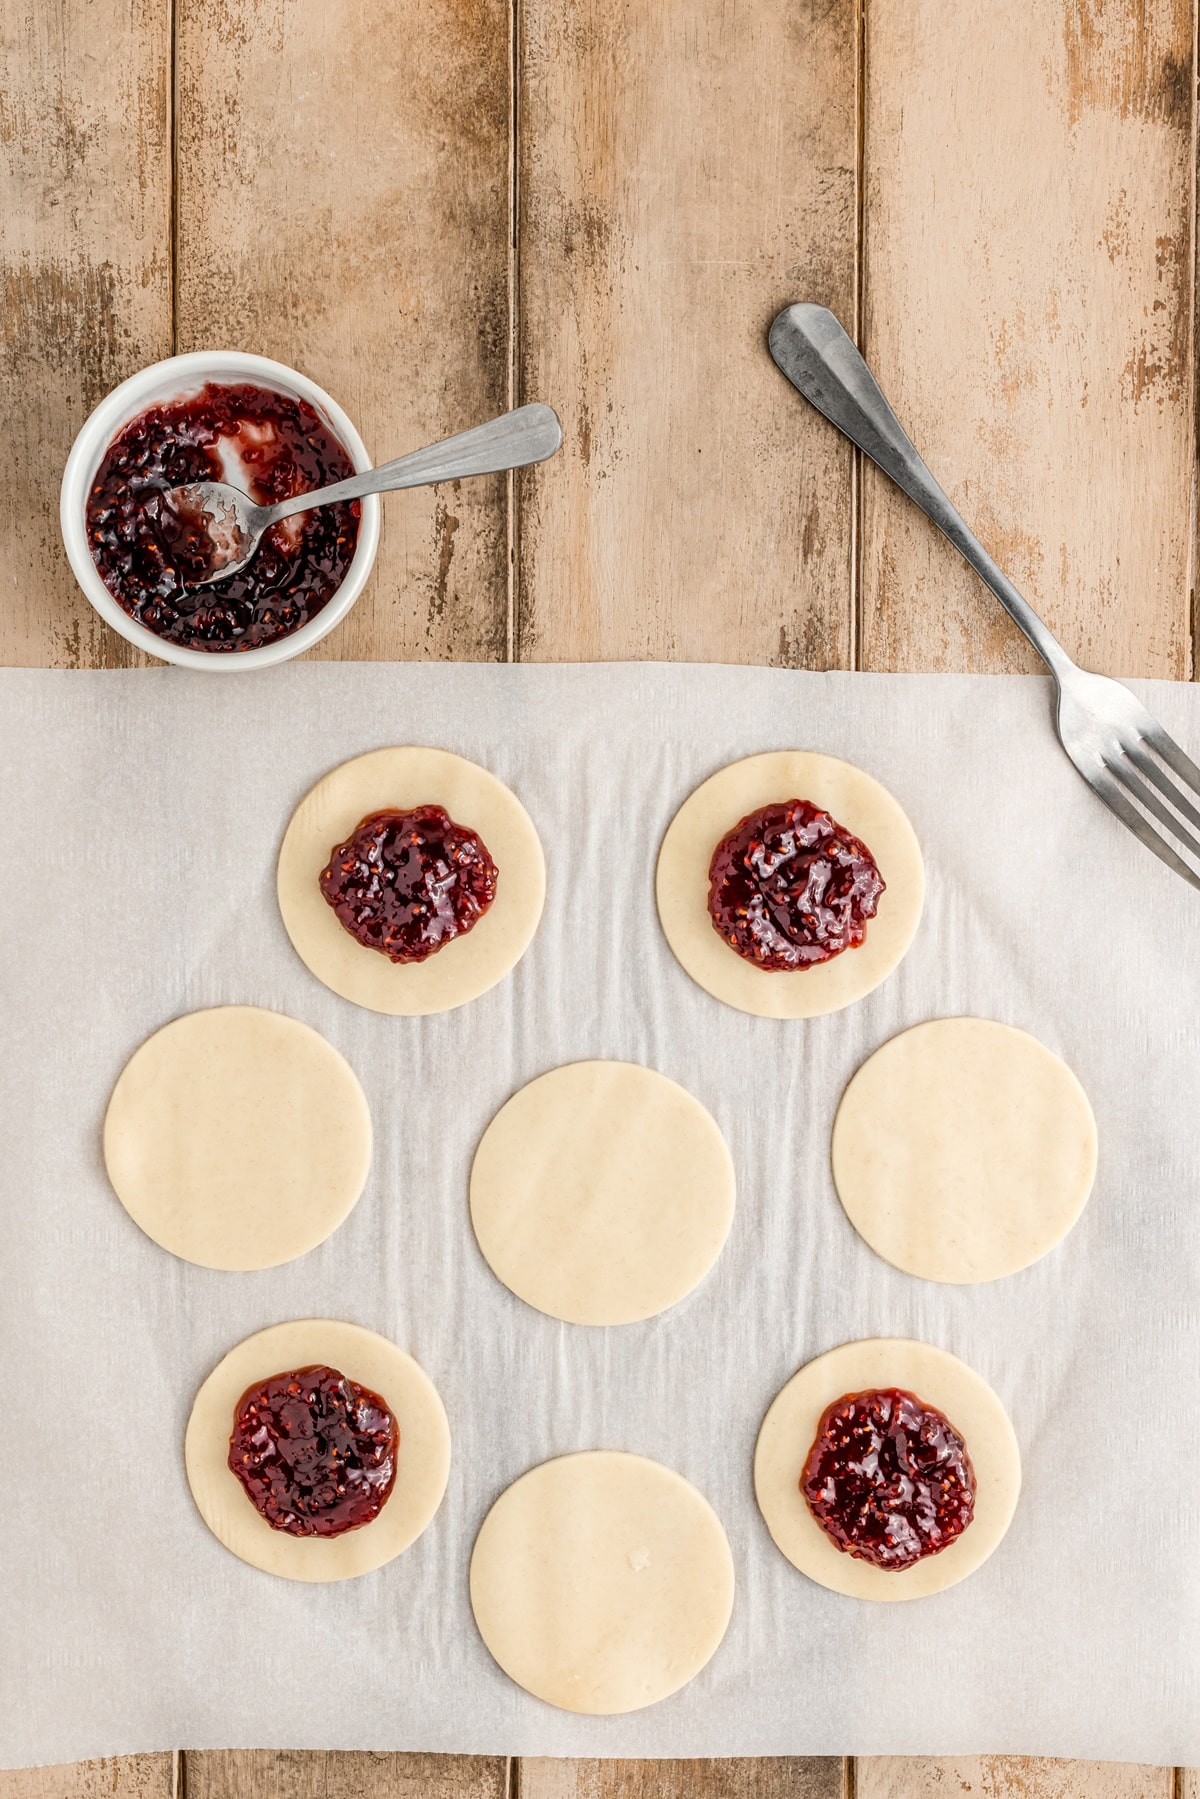 Adding jam to the circles of dough. 